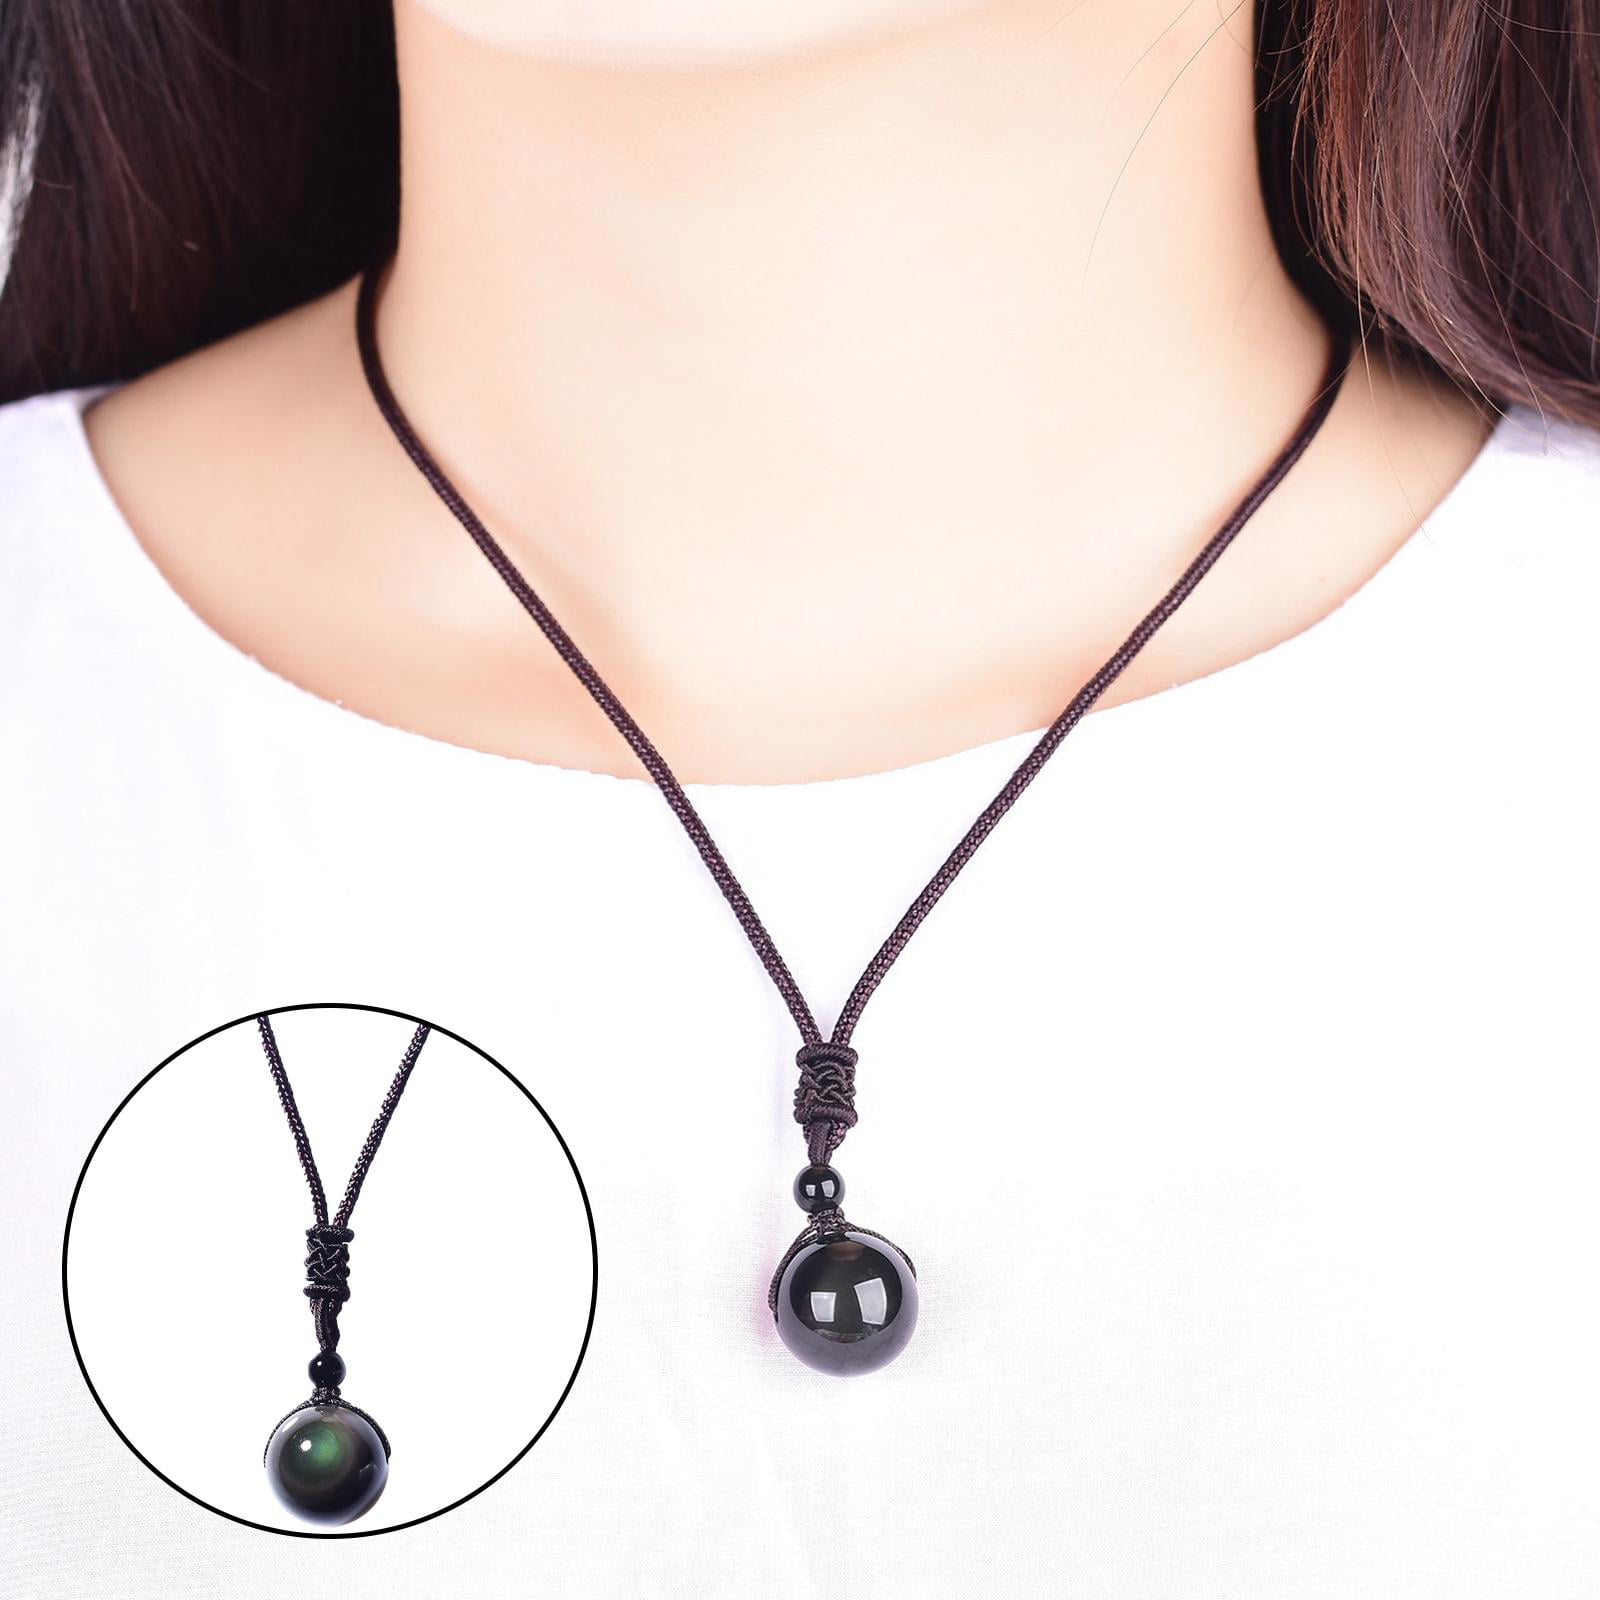 Mens Beads Necklace 8mm Black Obsidian Tiger Eye Healing Chakra Necklace  24'' | eBay